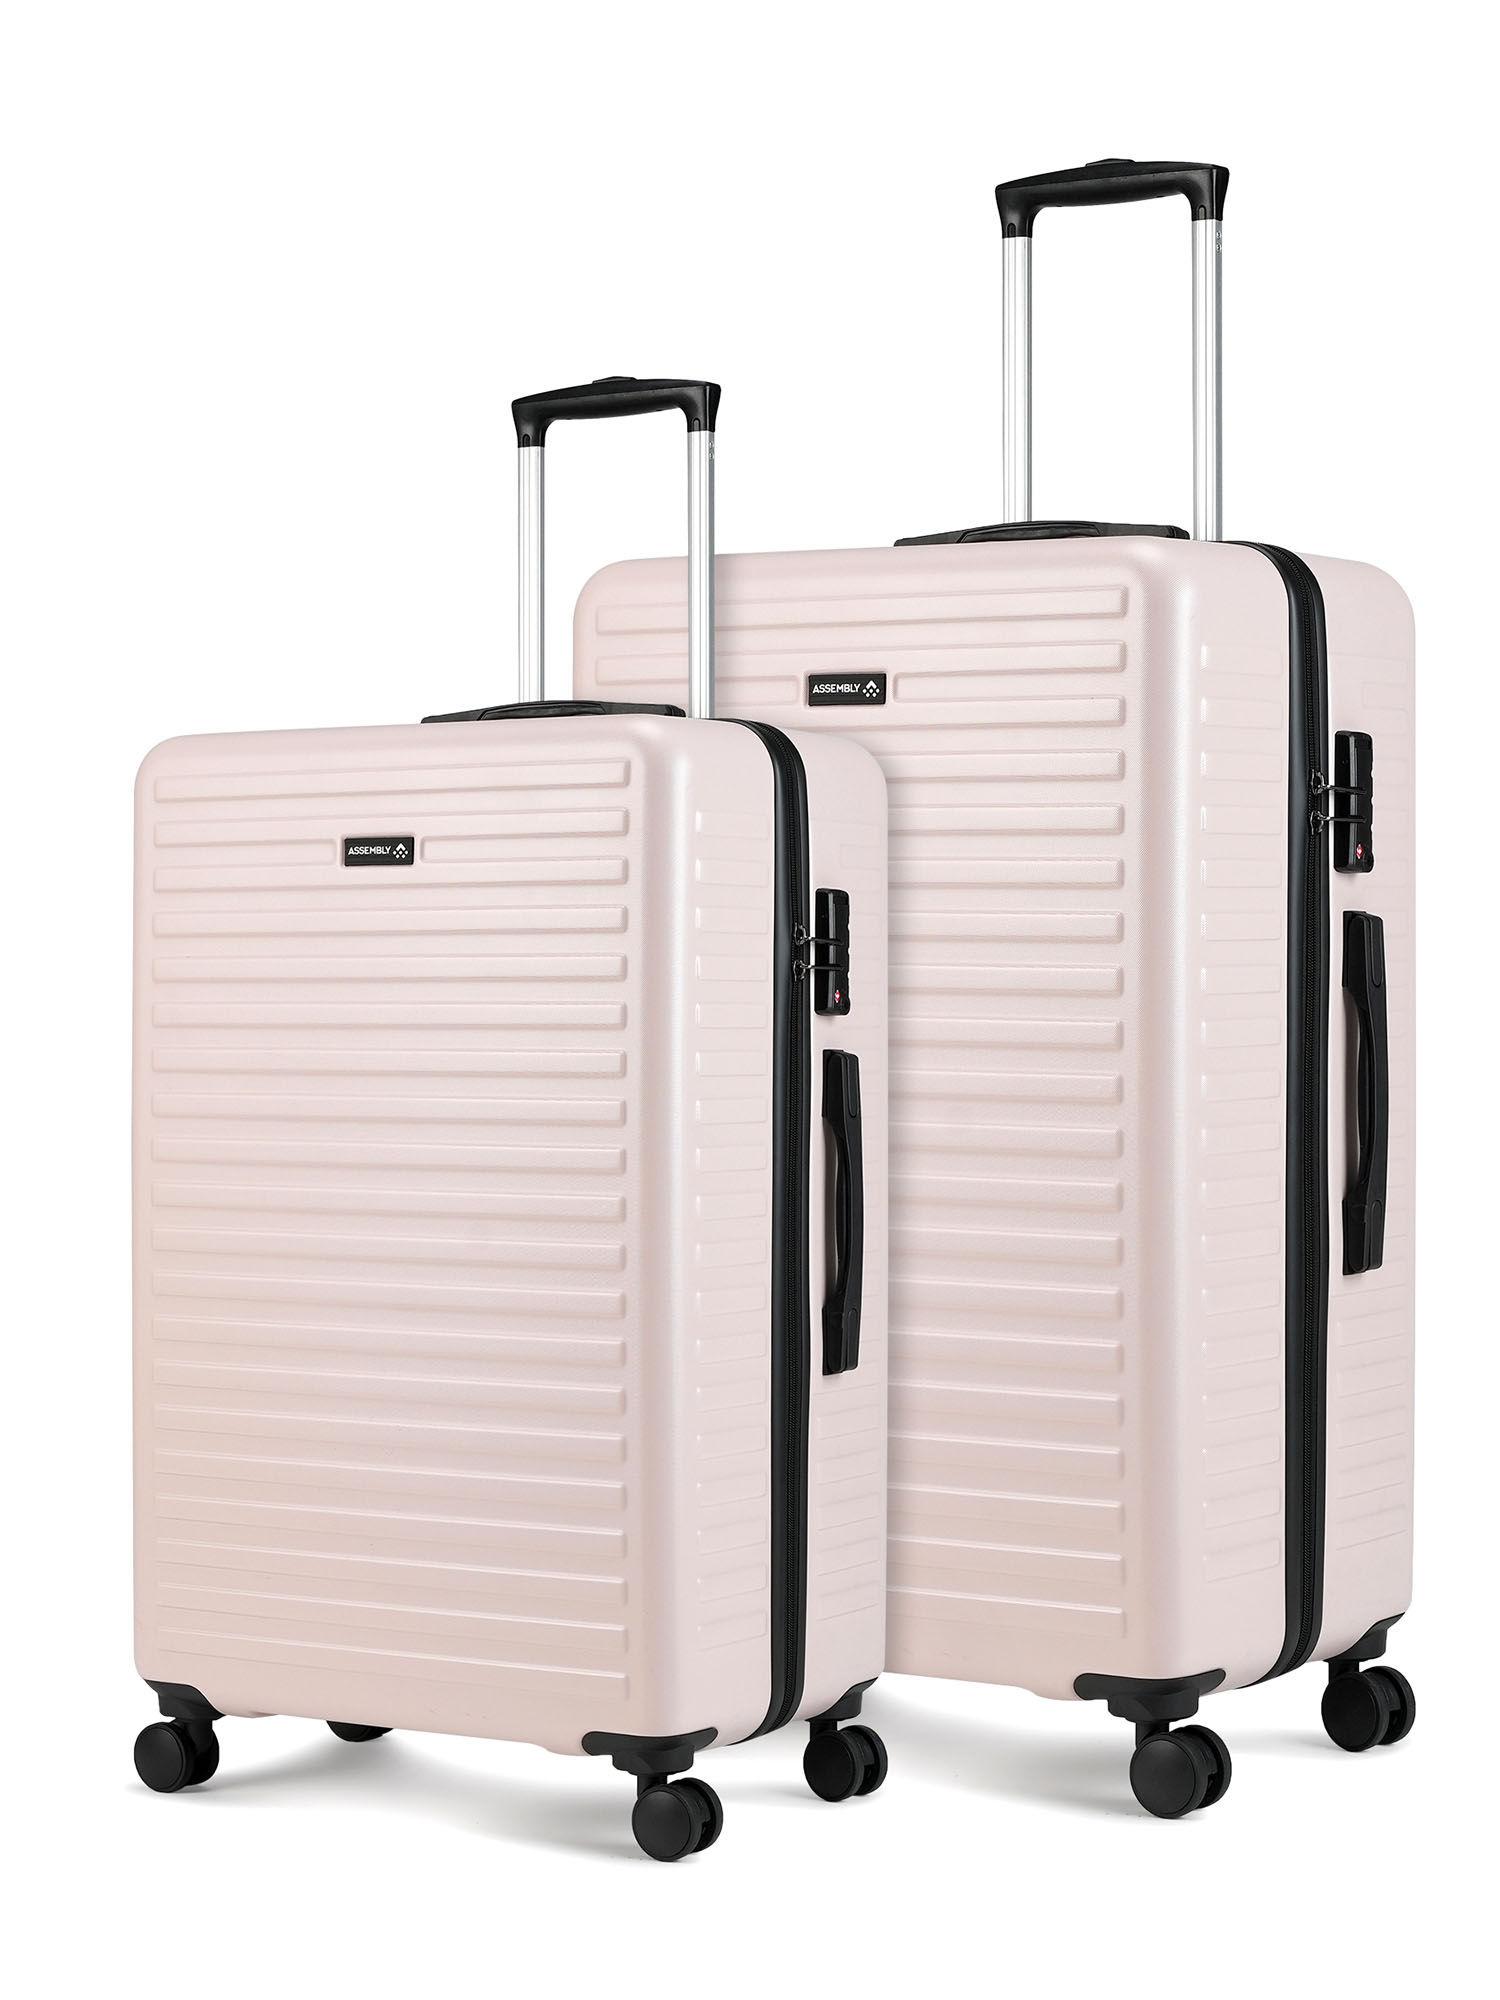 hard luggage set of 2 medium & large check-in trolley desert ivory